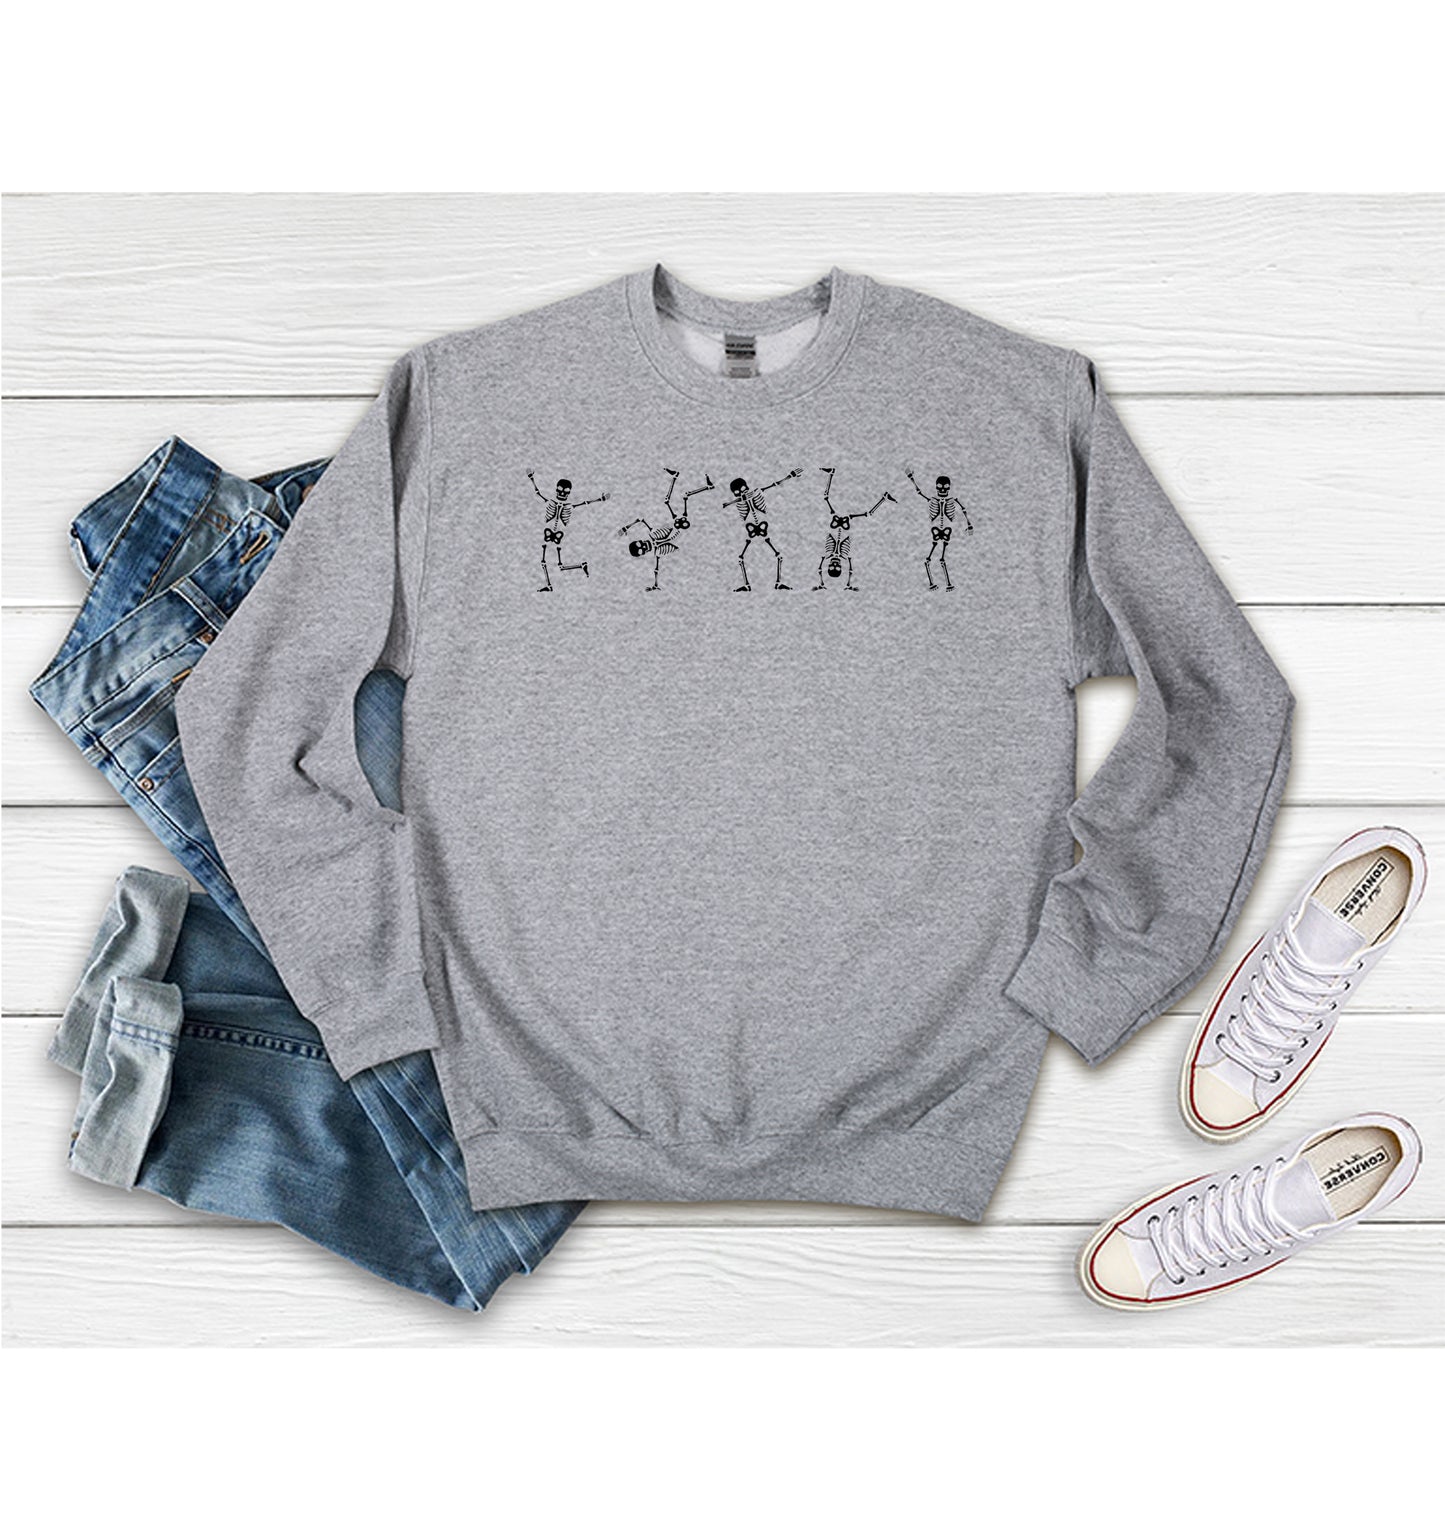 Dancing Skeletons - Sweatshirt